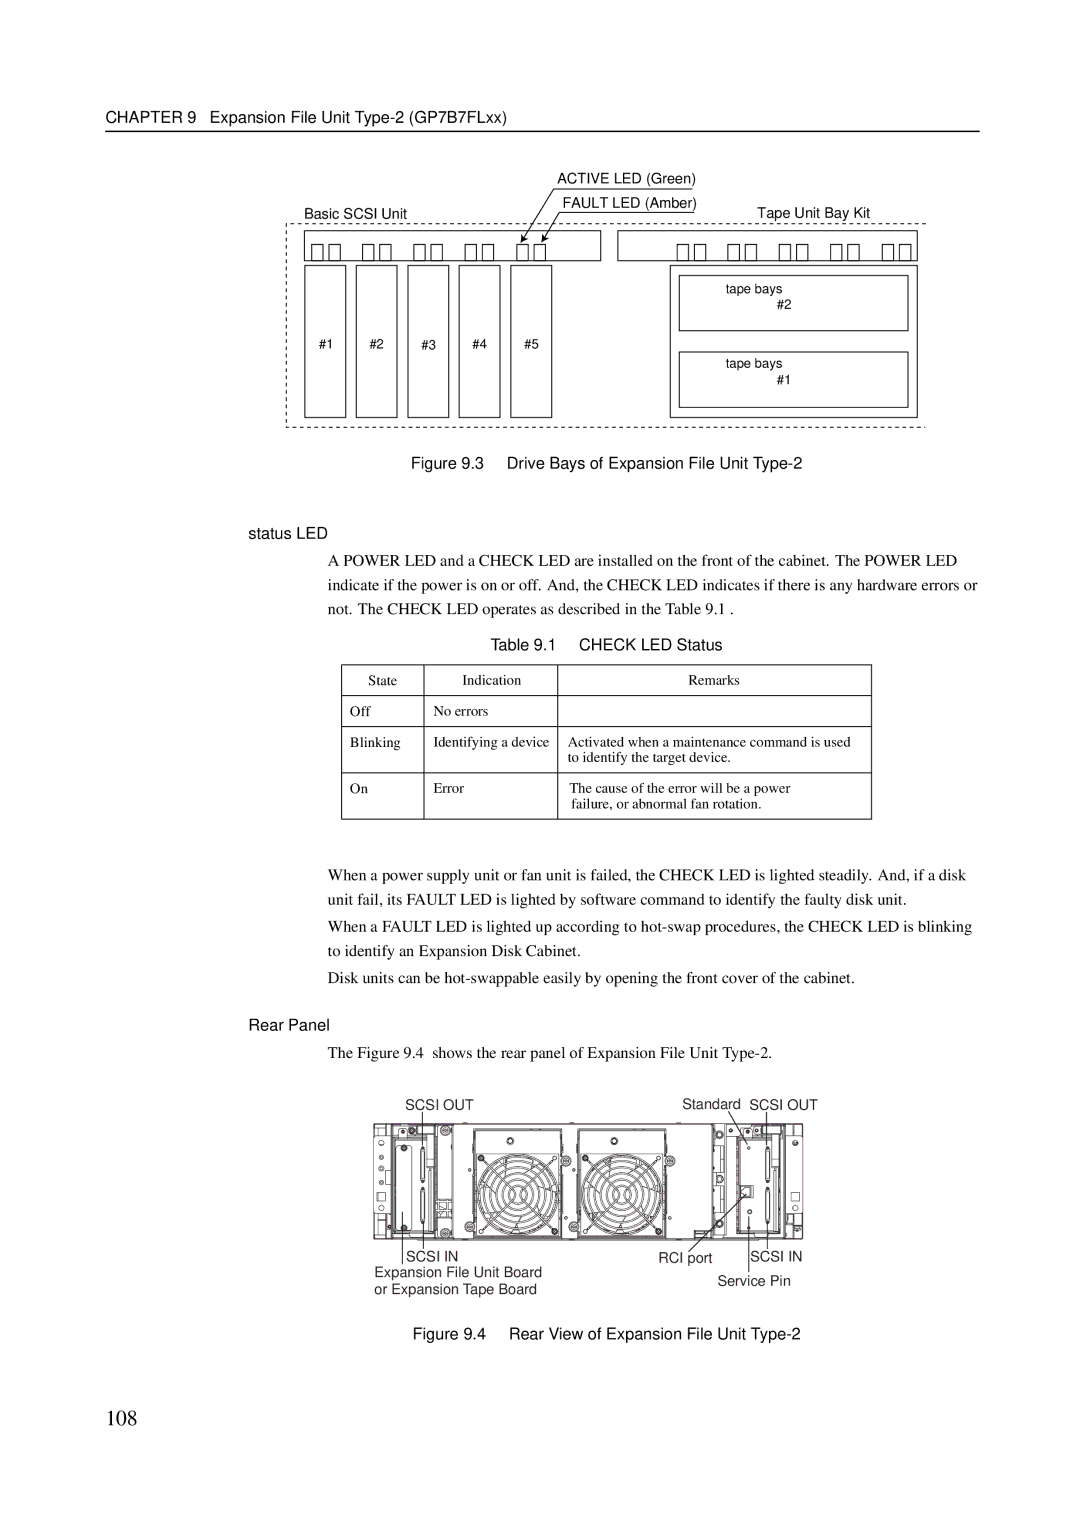 Fujitsu M600R, M200R, GranPower7000 (GP 7000F), M400R, M400A 108, Drive Bays of Expansion File Unit Type-2 Status LED 